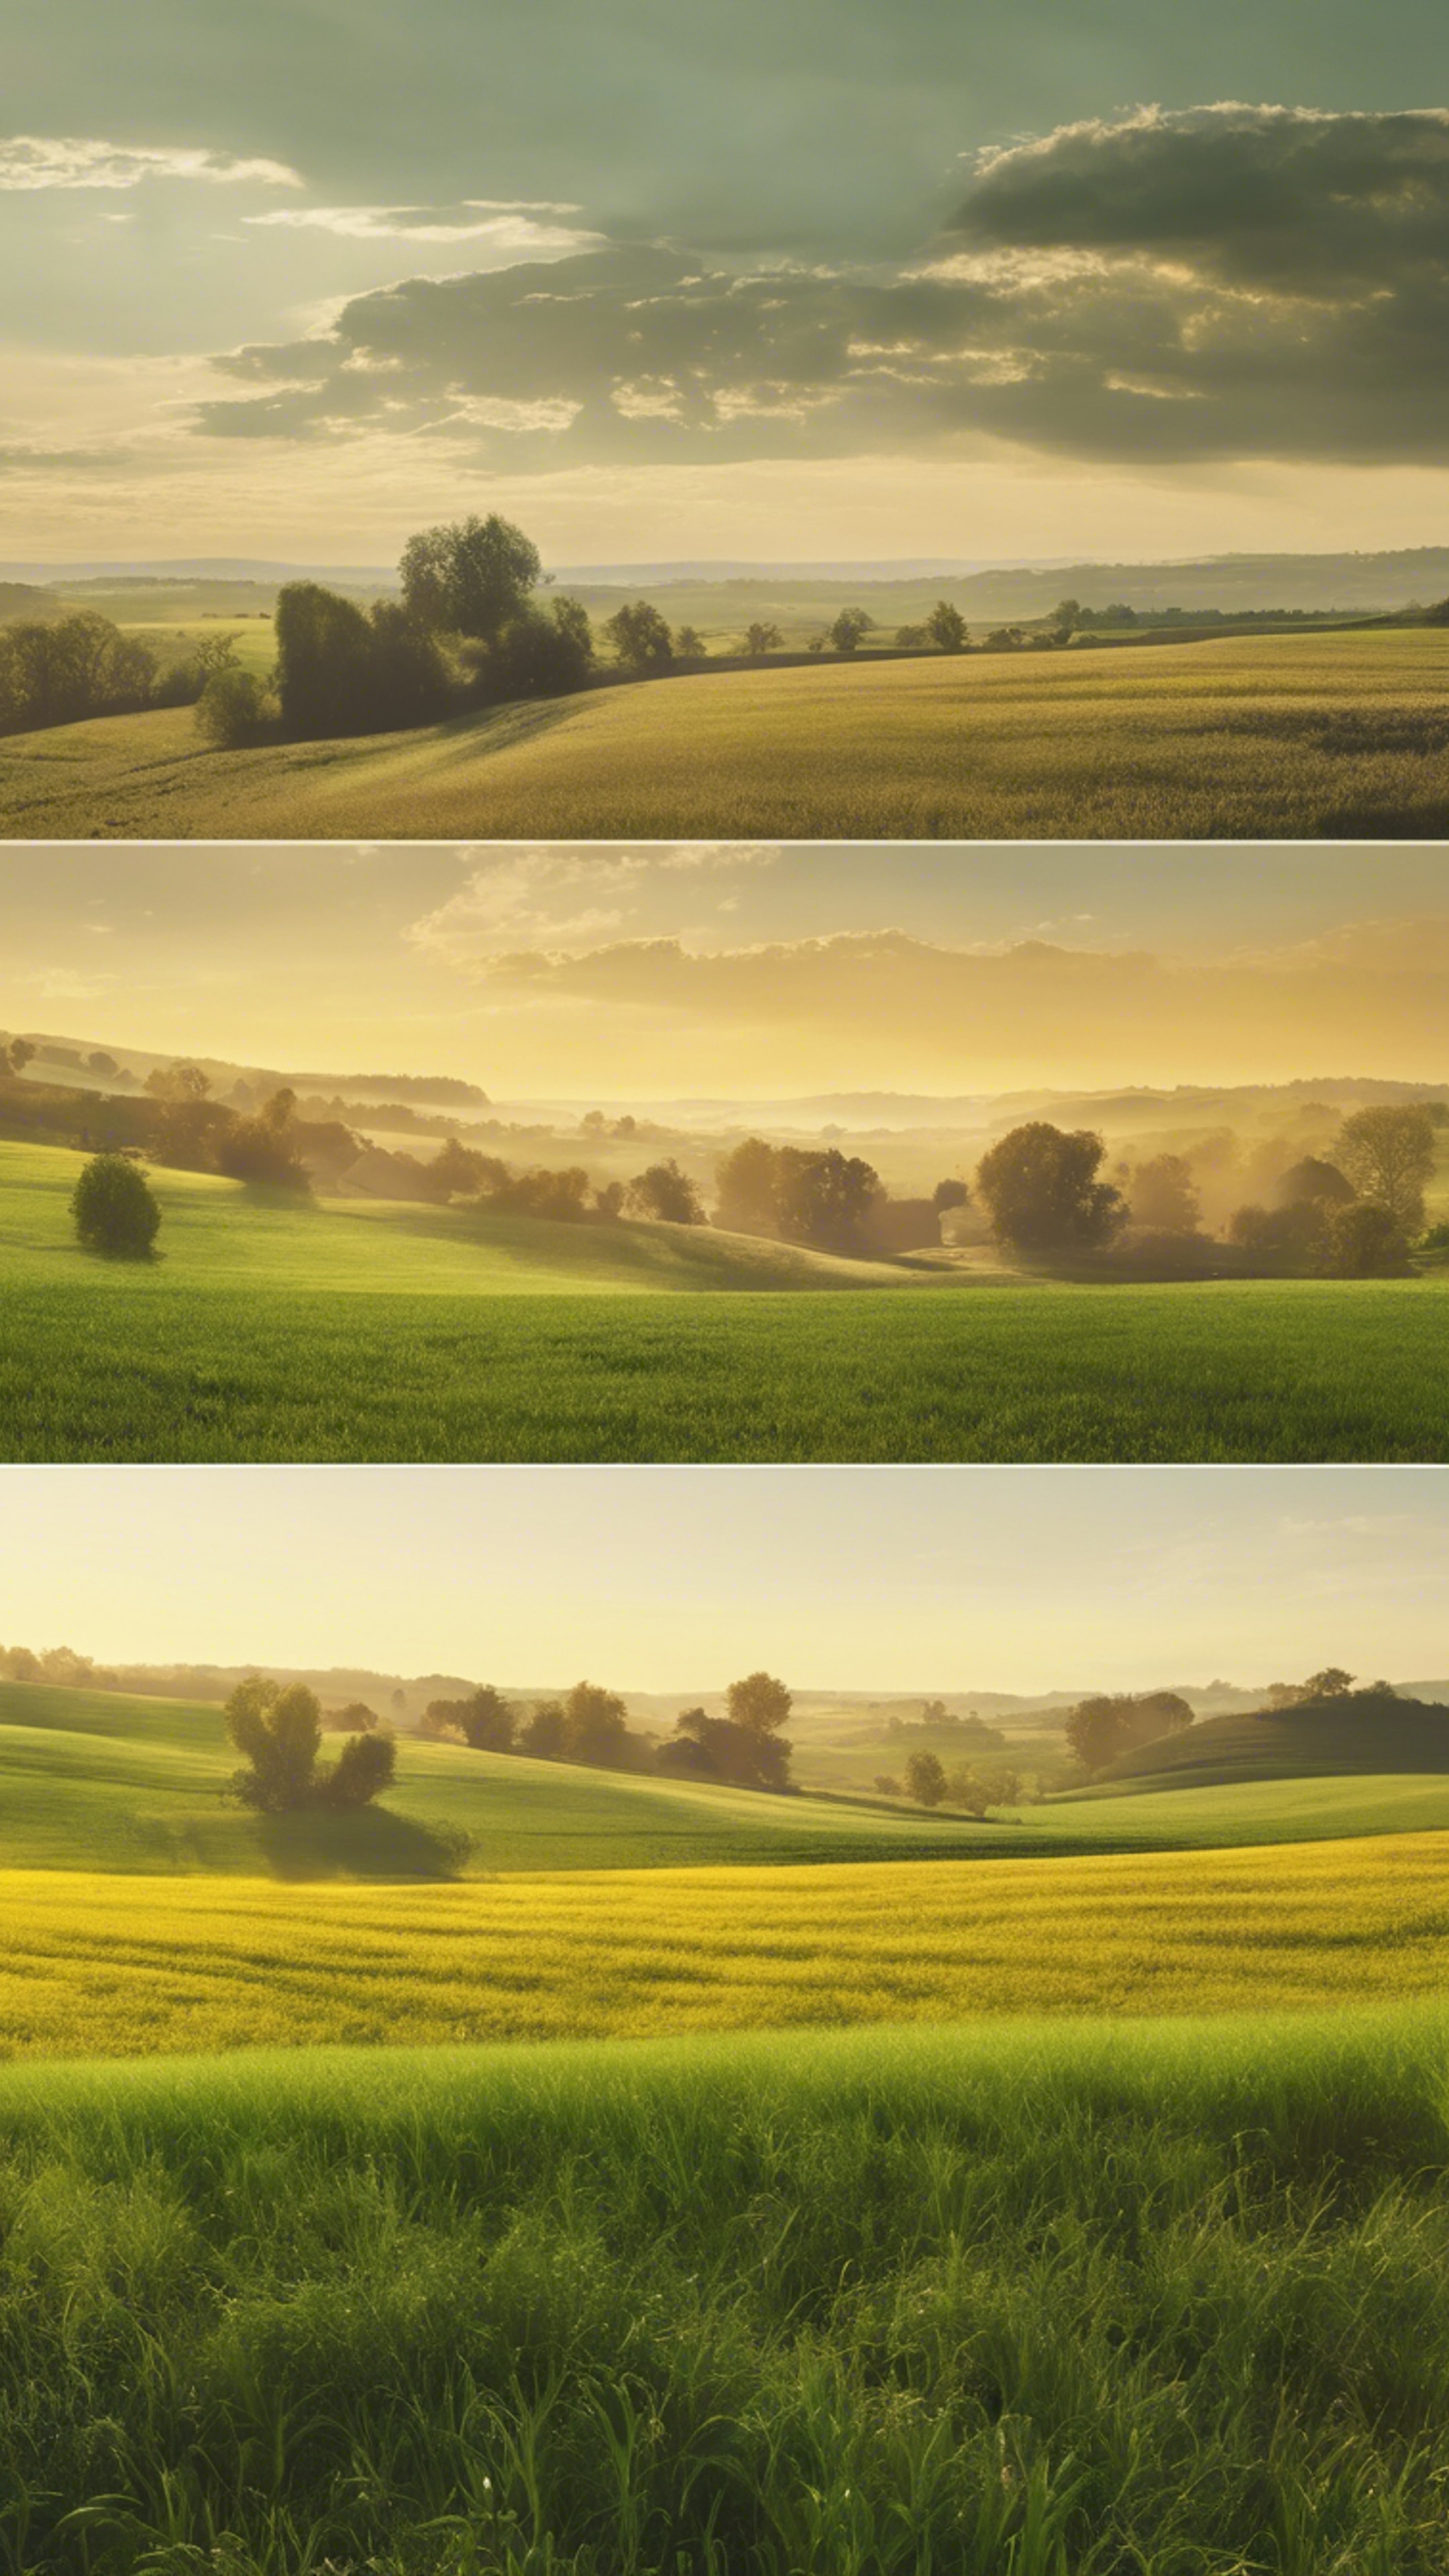 A quiet rural landscape at sunrise, where green fields gradually blend into the yellow horizon.壁紙[da8659ab7dd341f0b284]